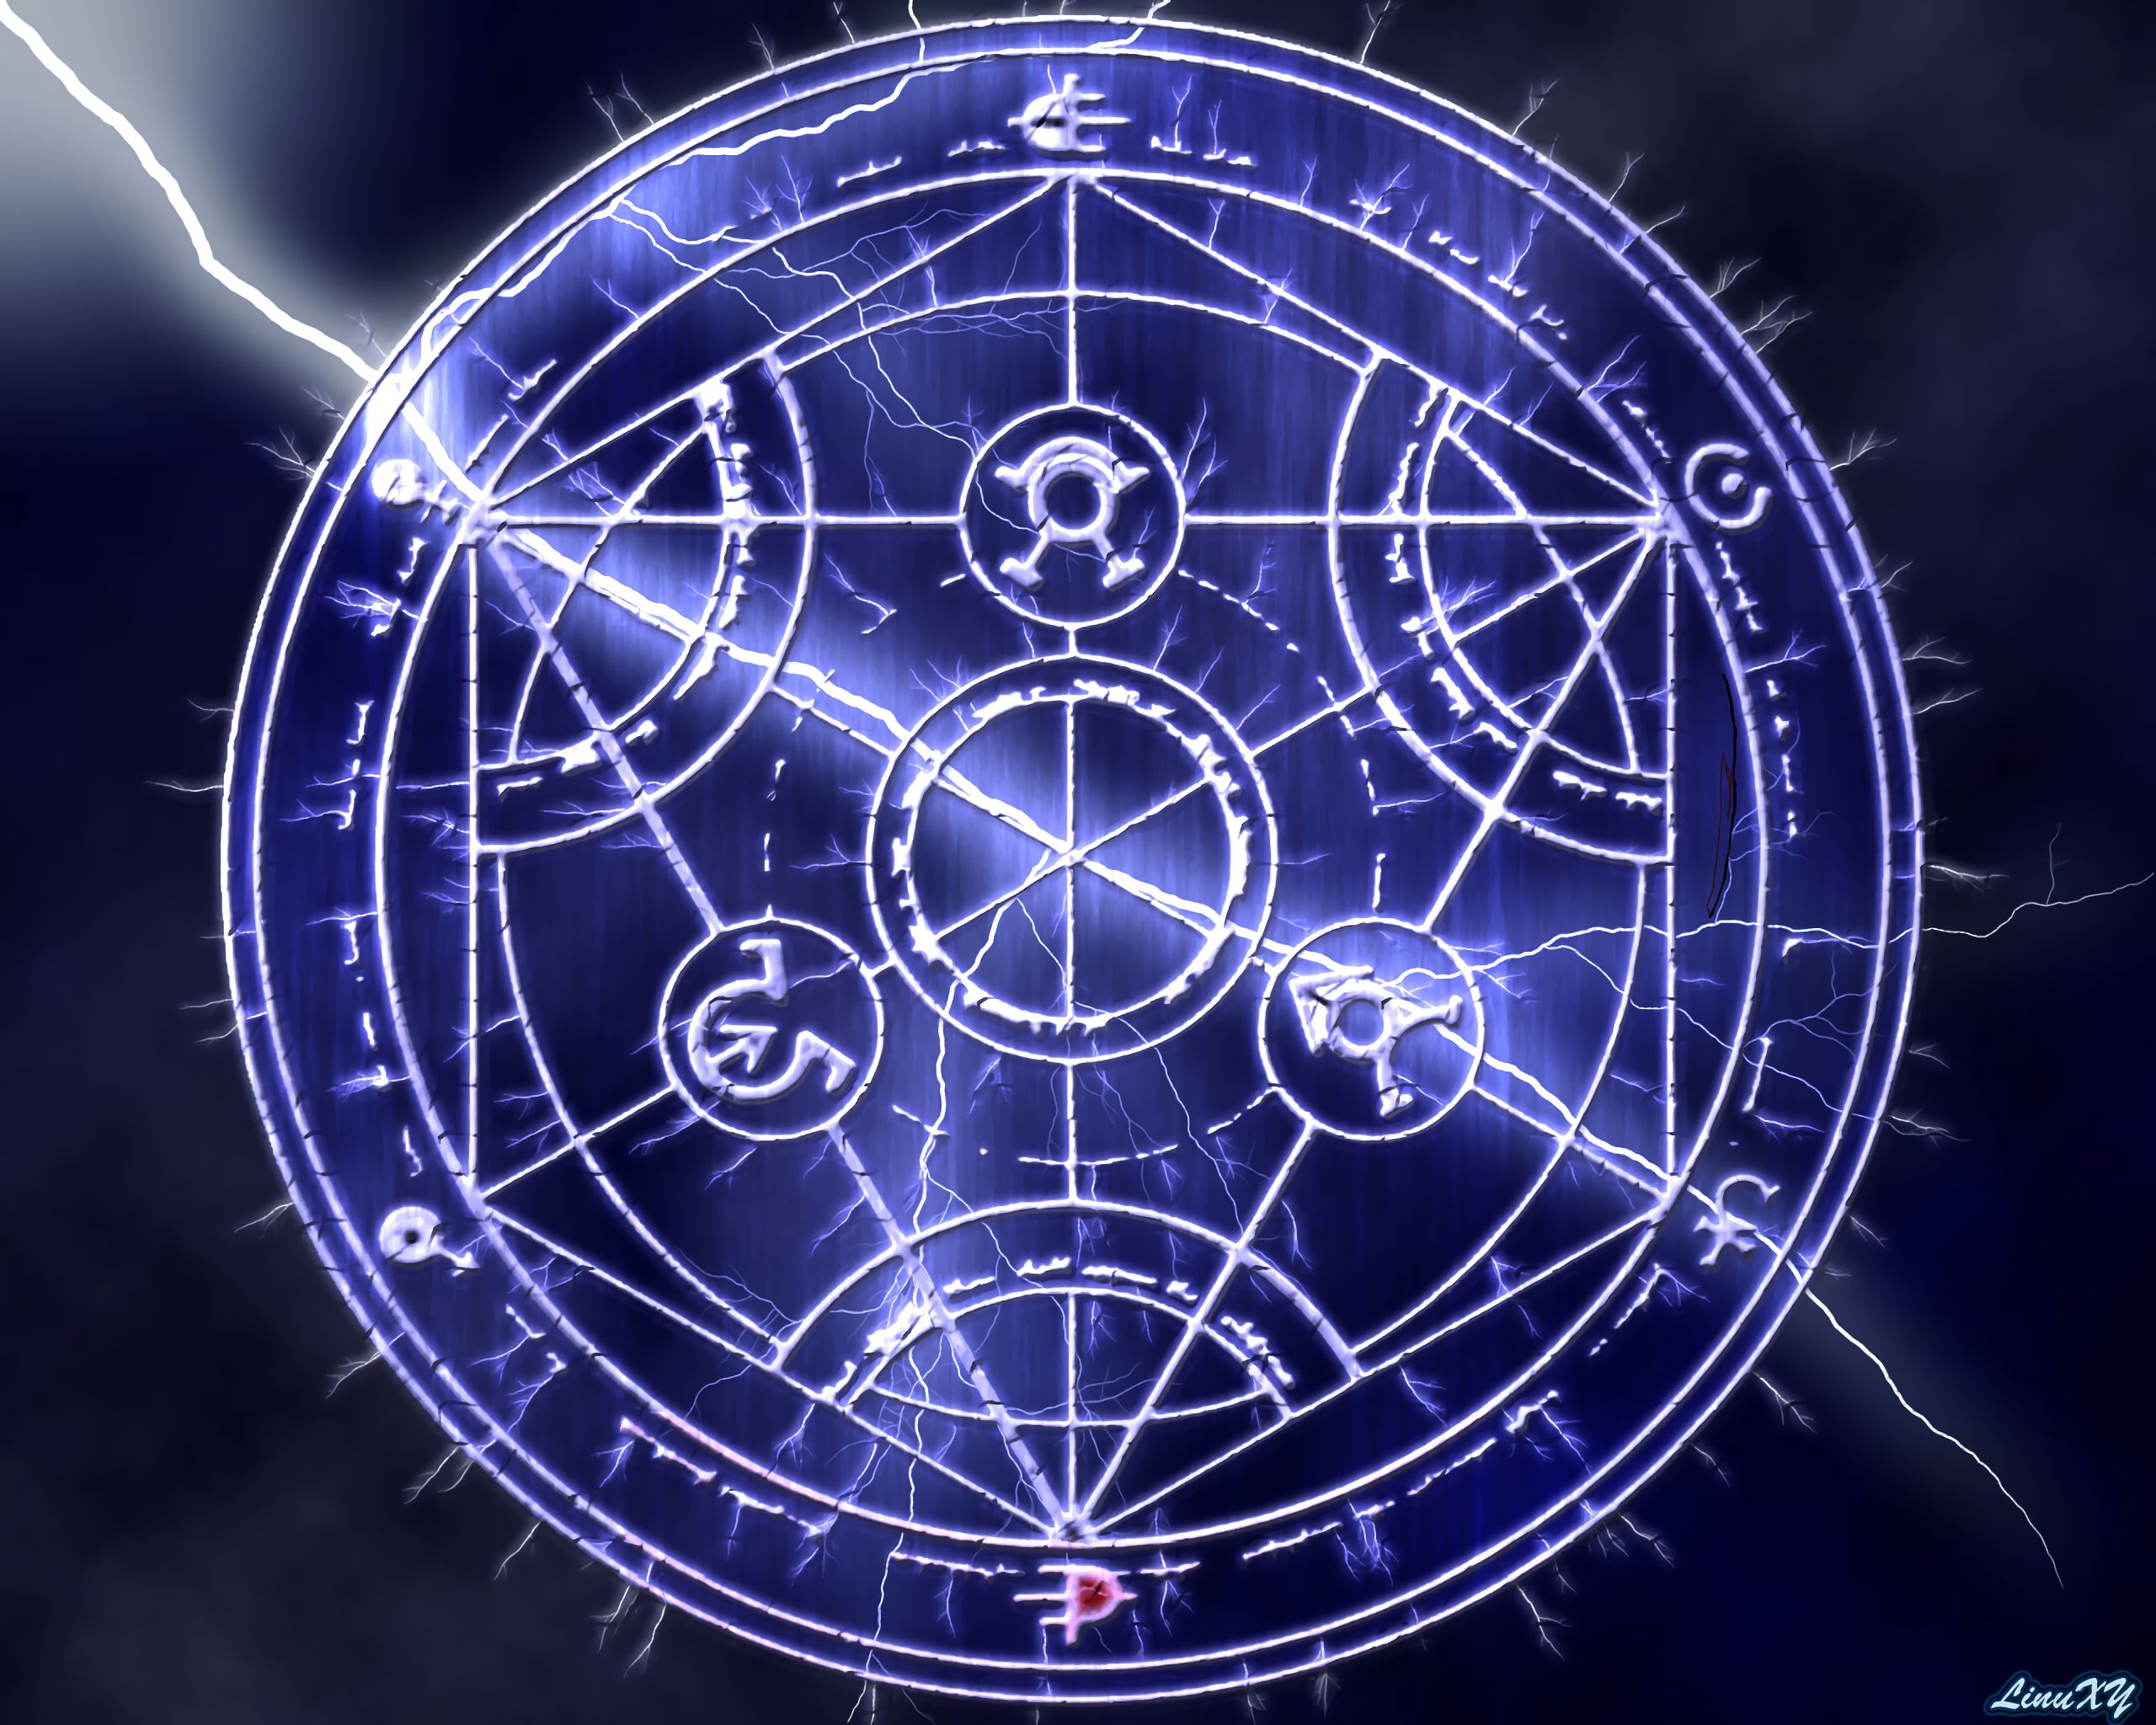 Popular Fullmetal Alchemist Image for Phone